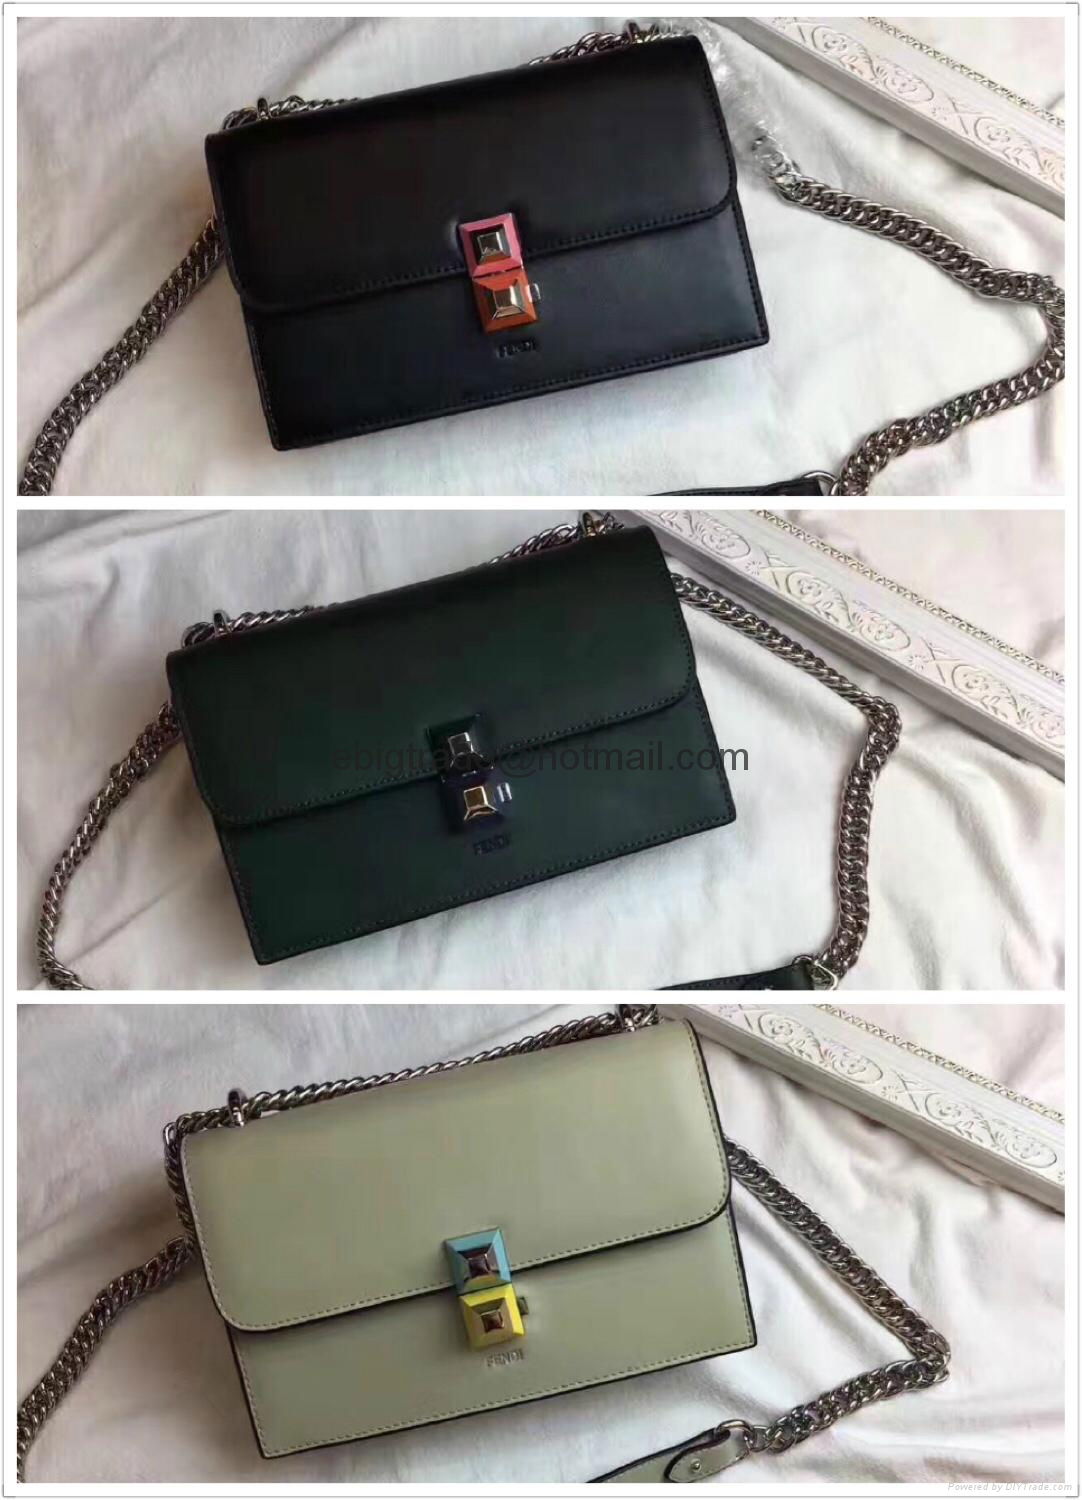 Cheap Fendi handbags discount Fendi handbags price Fendi bags outlet Fendi bags (China Trading ...